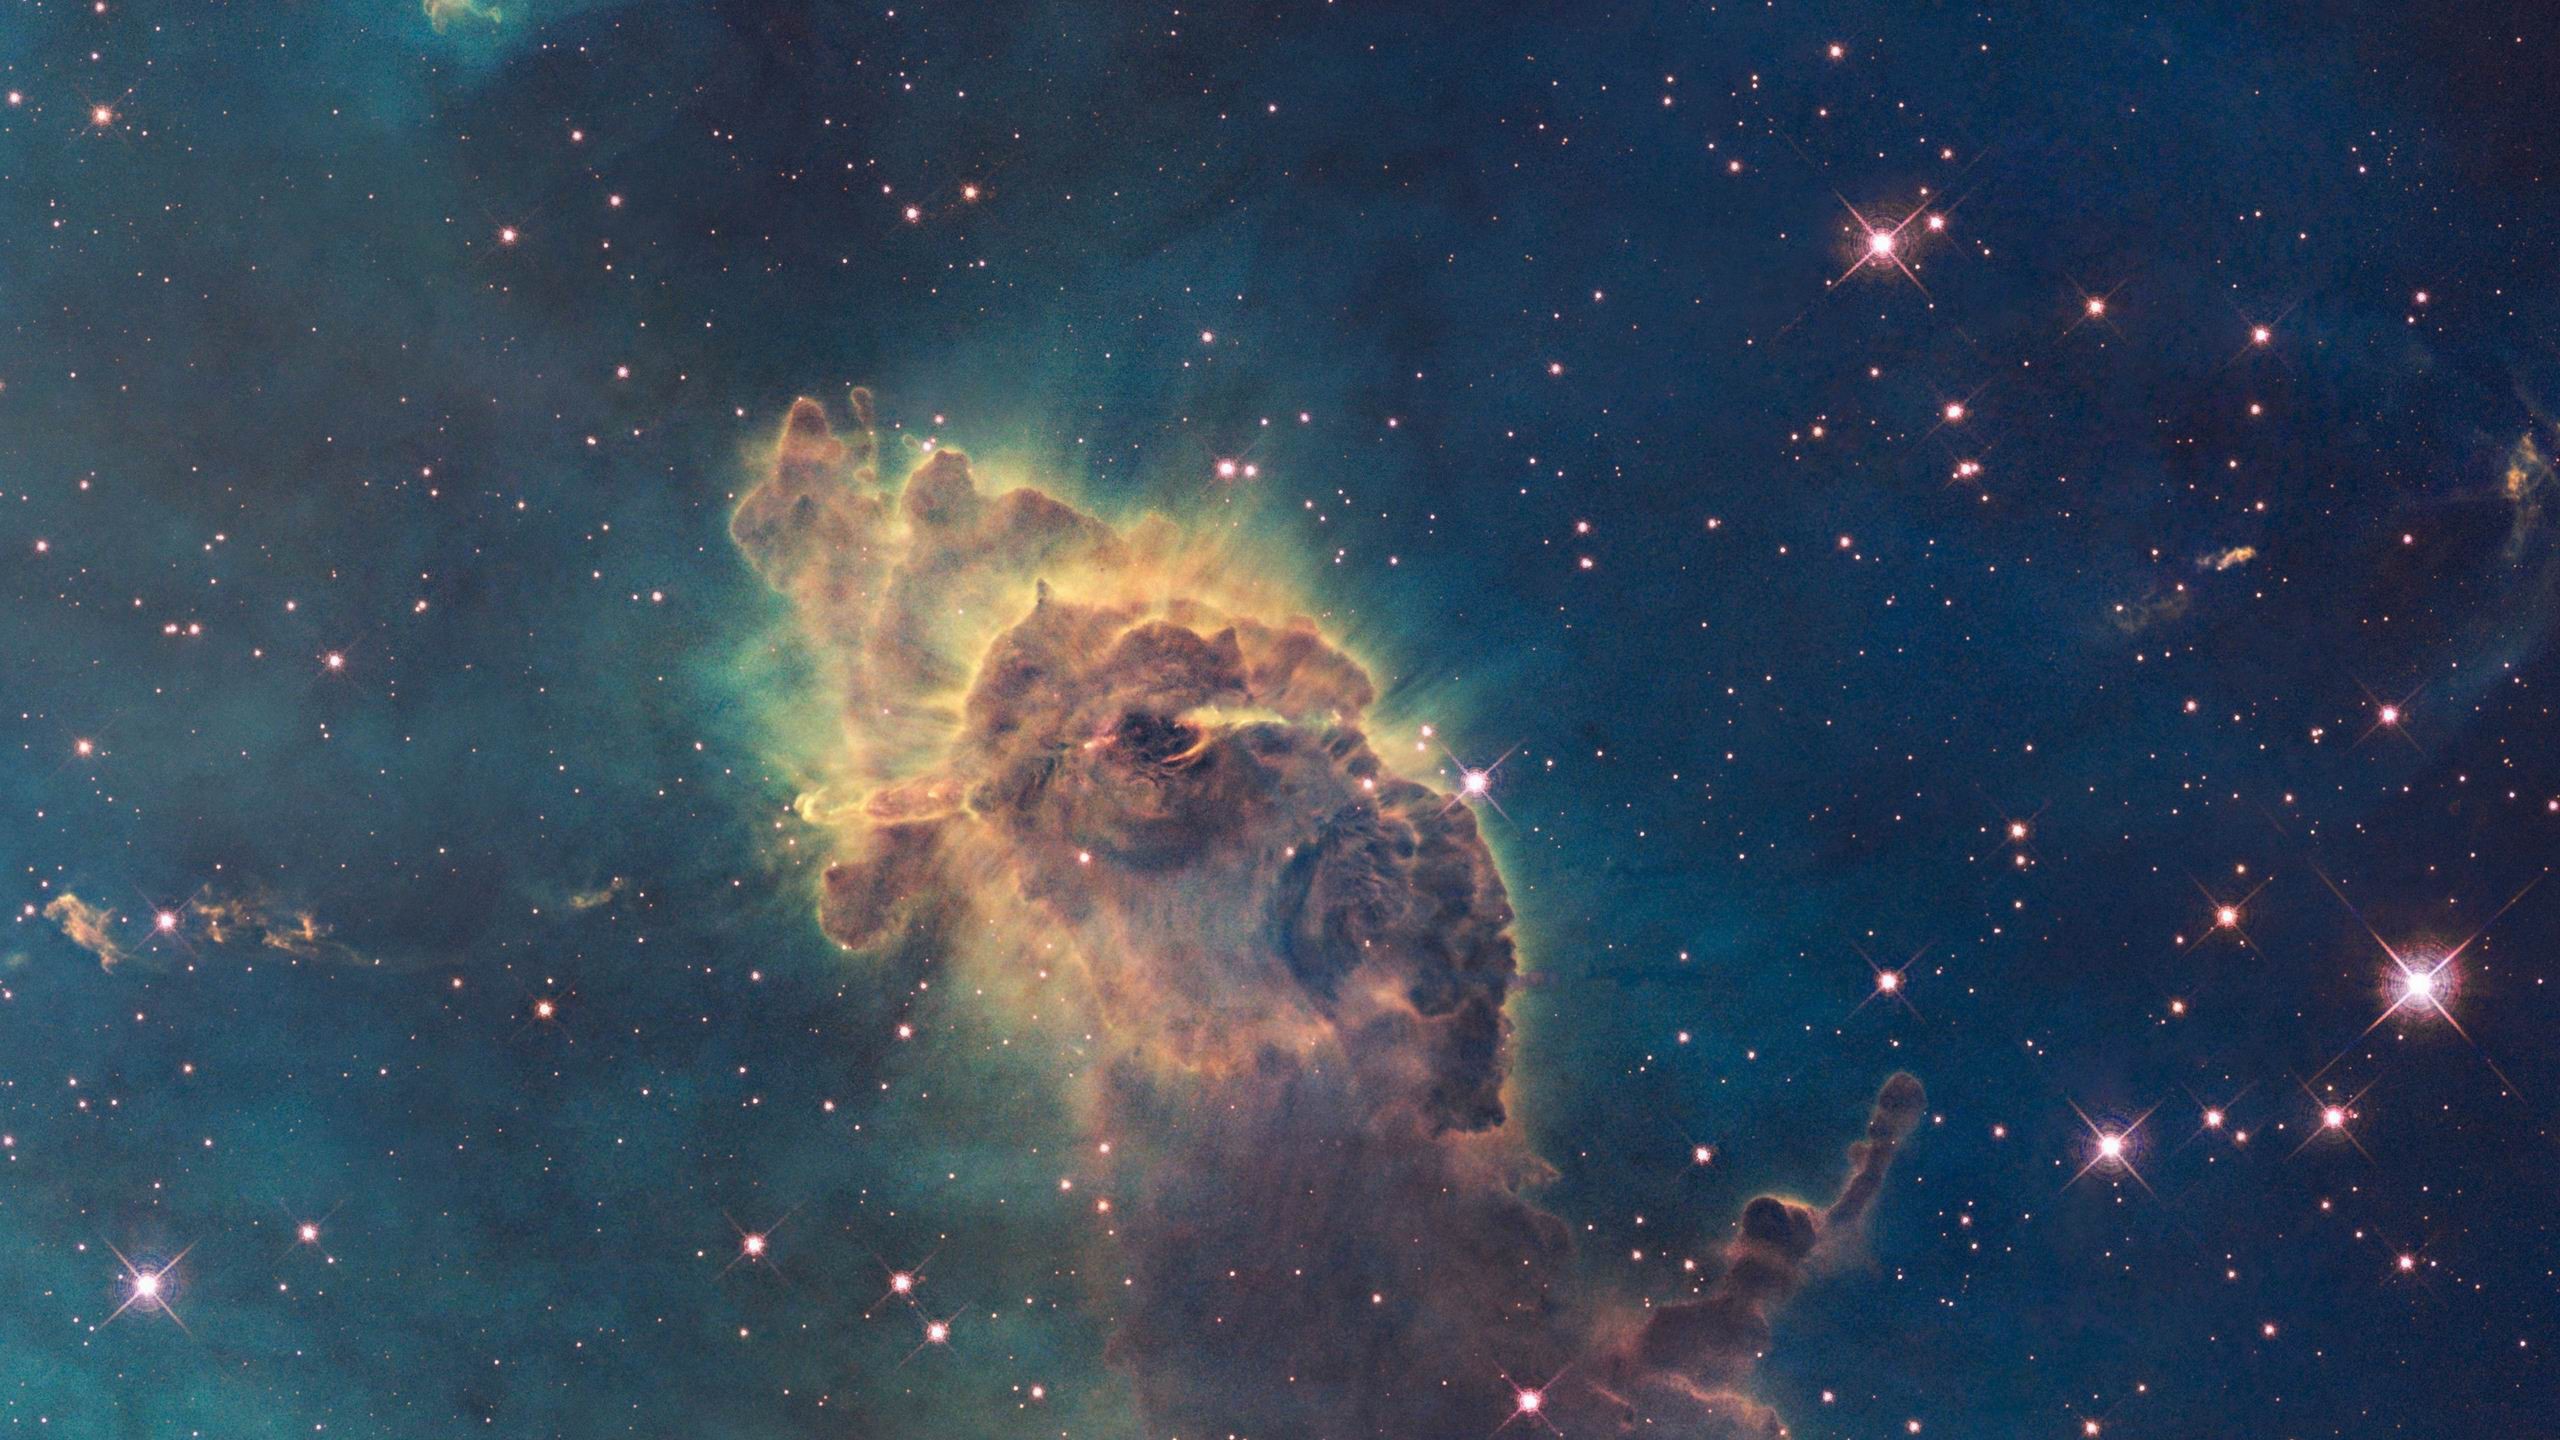 General 2560x1440 space universe space art stars artwork digital art nebula